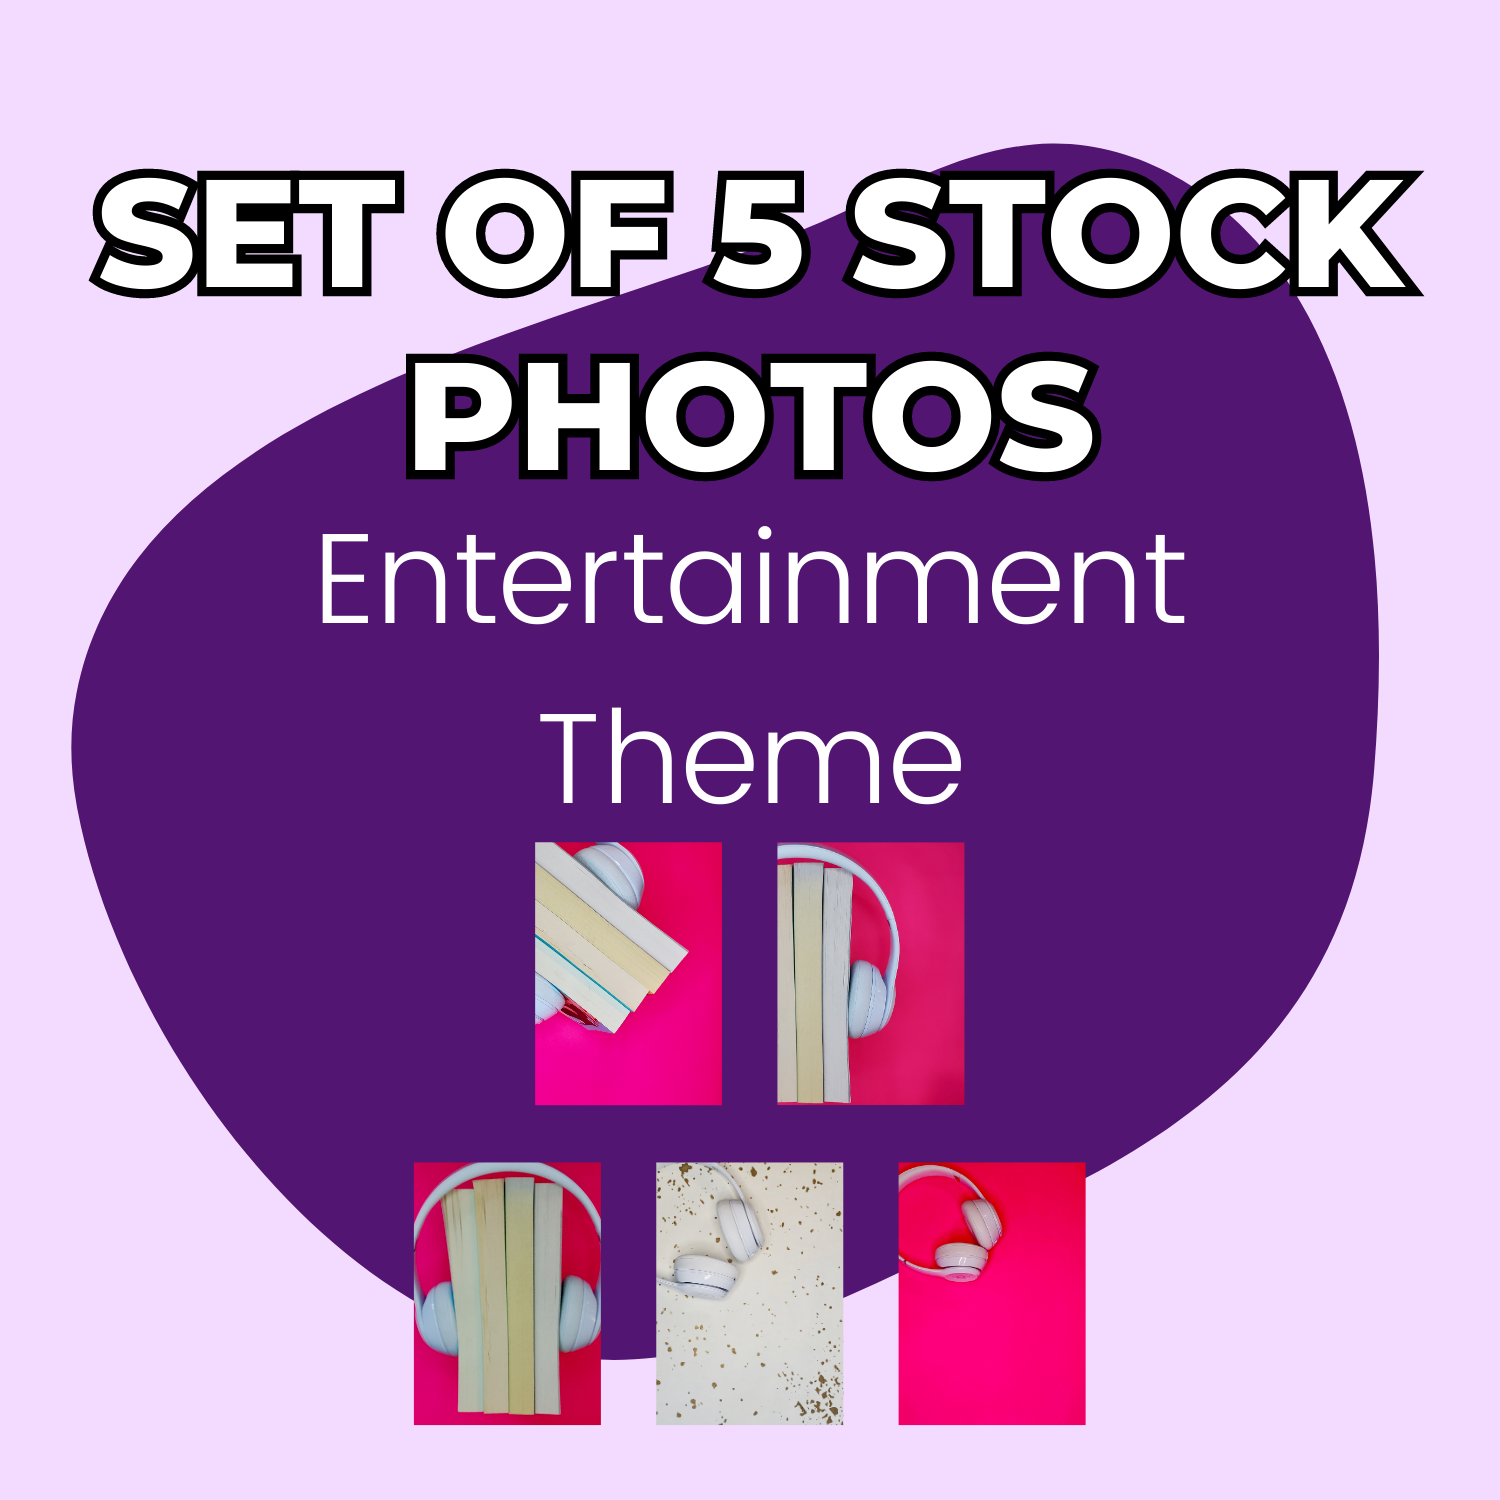 Entertainment Themed Stock Photos (set of 5)